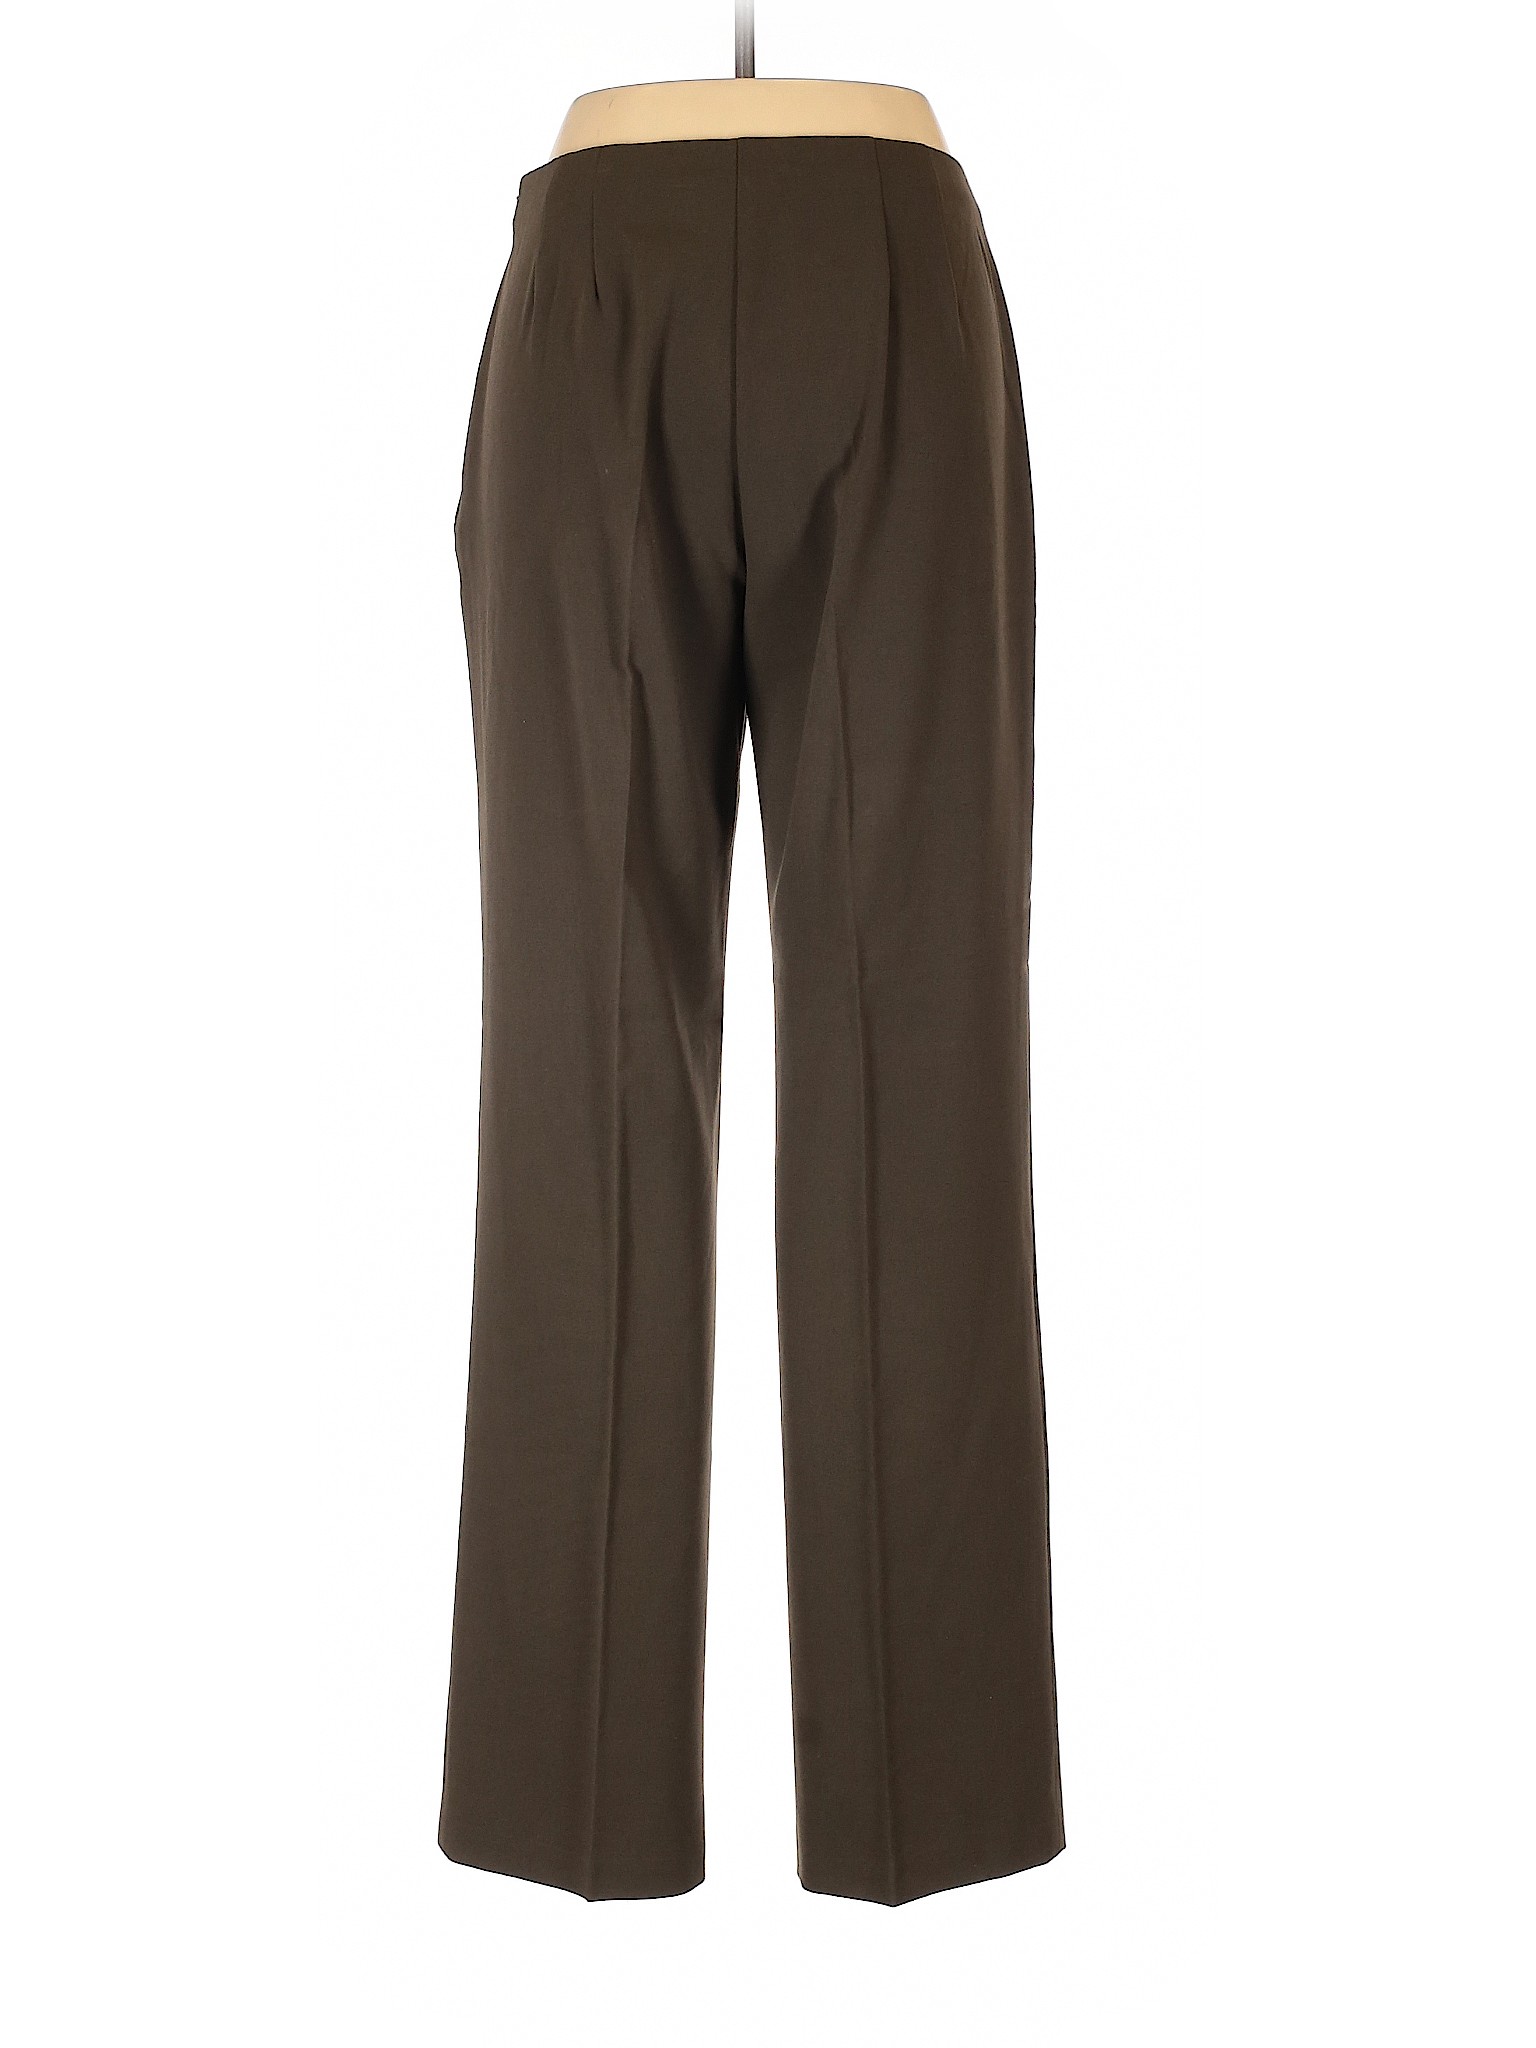 Coldwater Creek Women Brown Casual Pants 10 | eBay